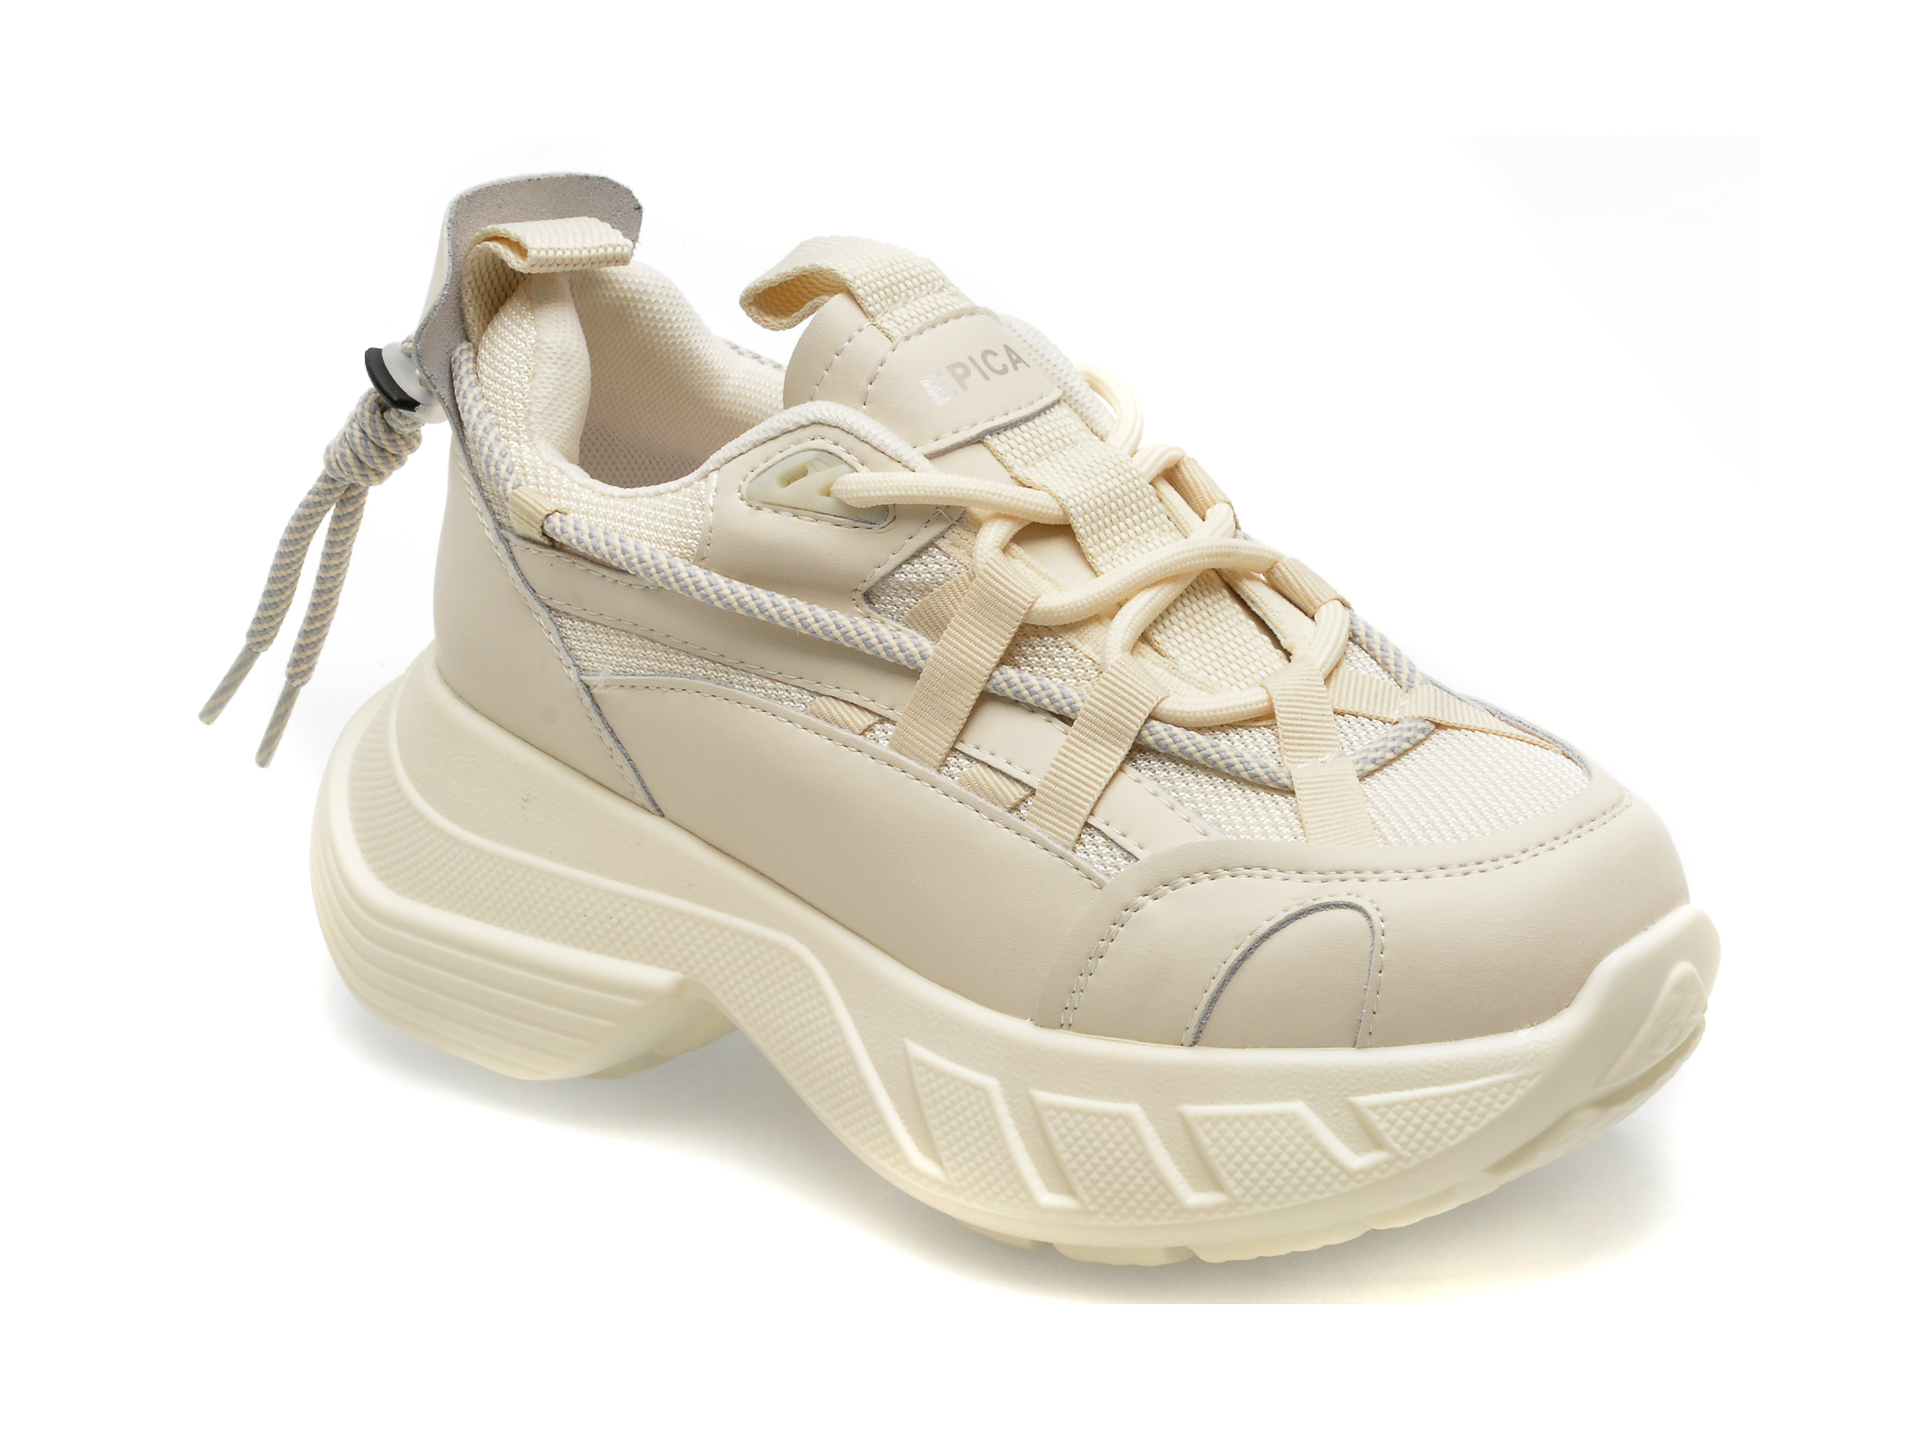 Pantofi EPICA bej, 610, din material textil si piele ecologica